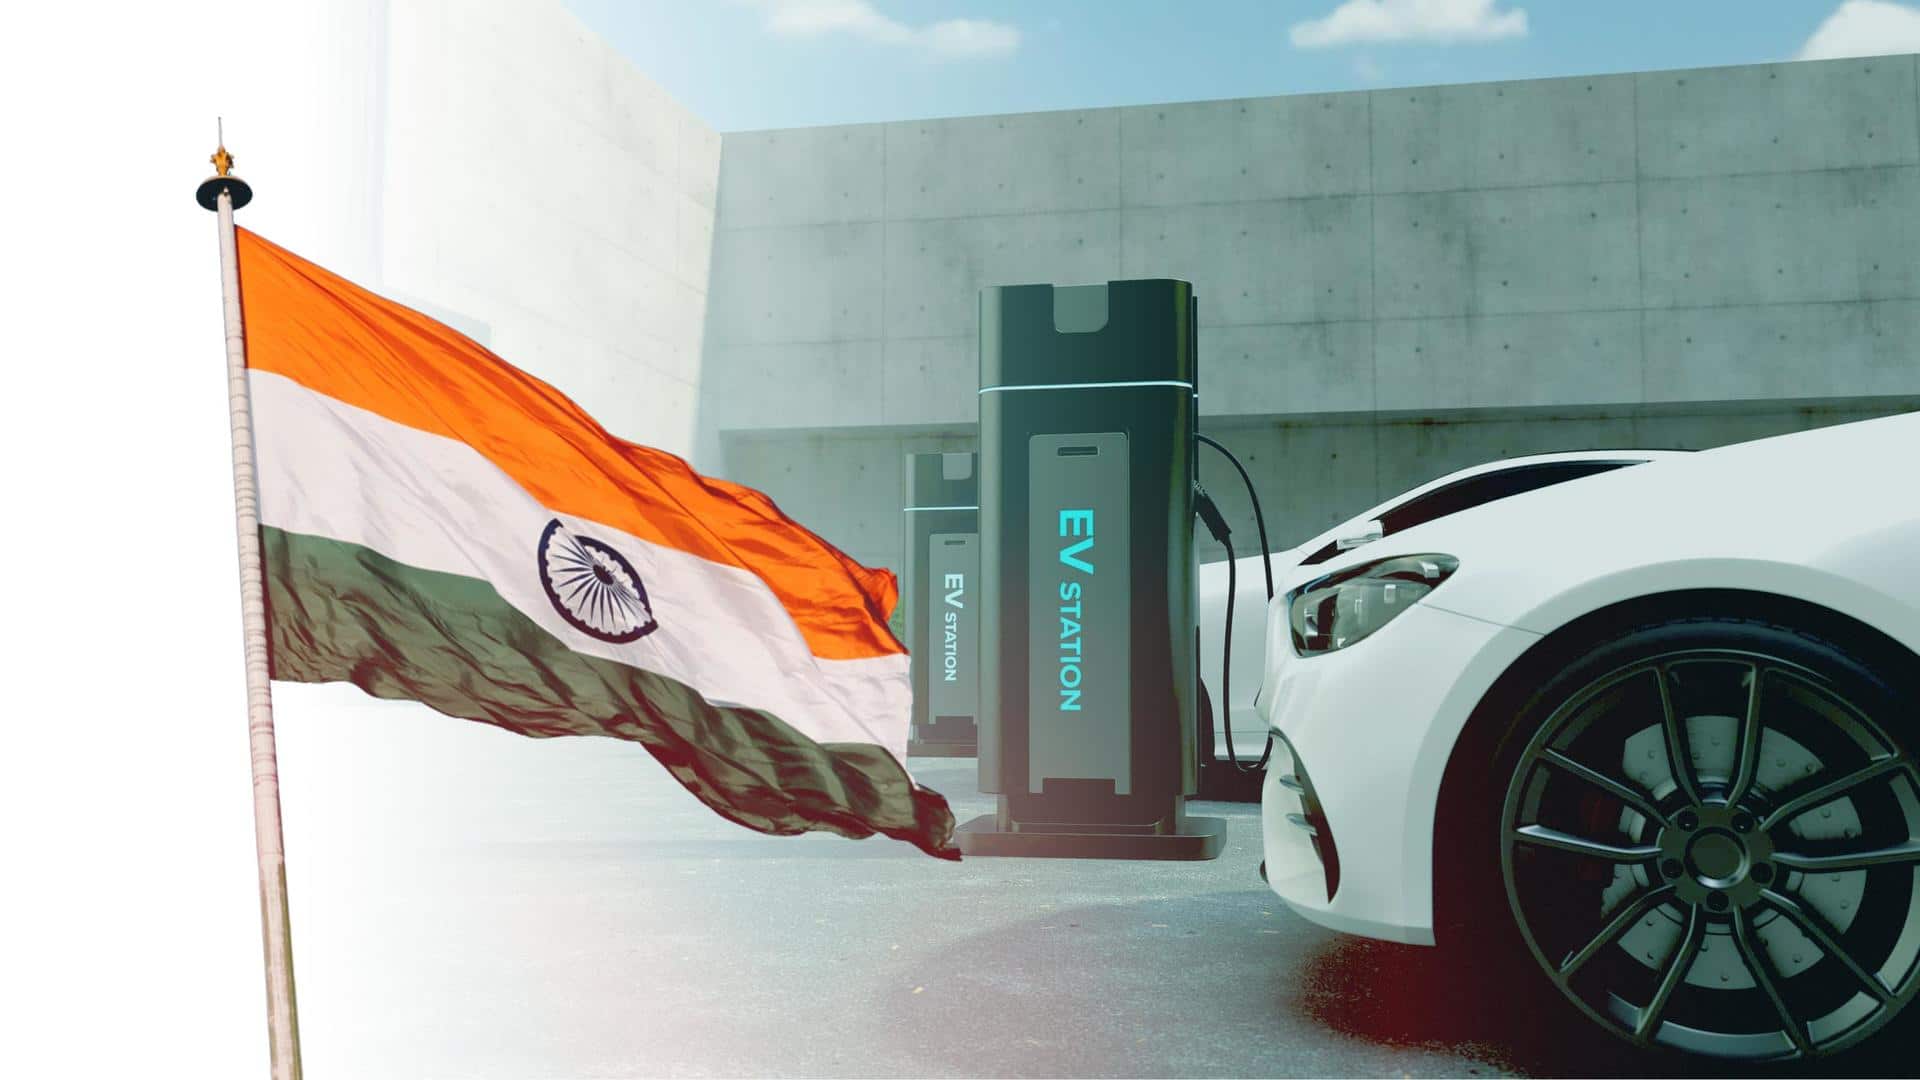 Uttar Pradesh has 1 charging station per 1,200 EVs